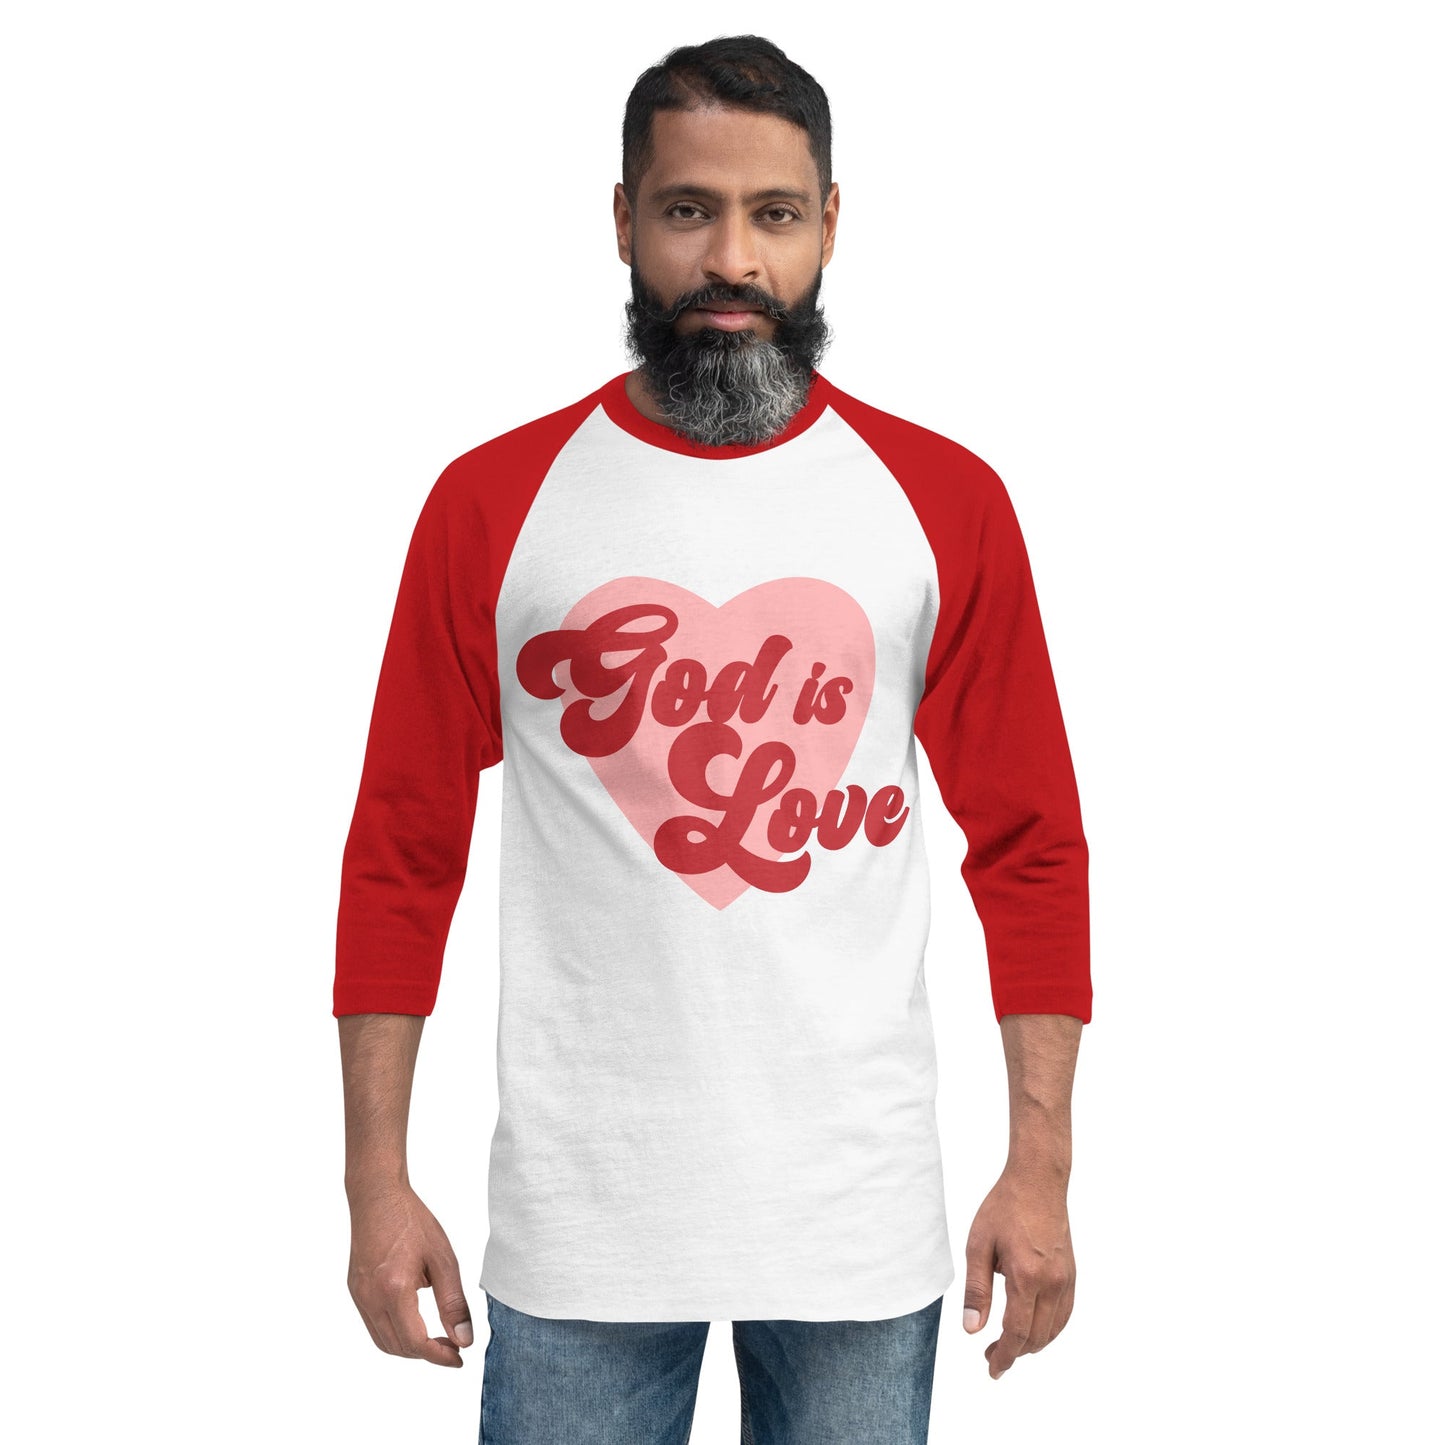 God is Love - 3/4 sleeve raglan shirt - Creation Awaits